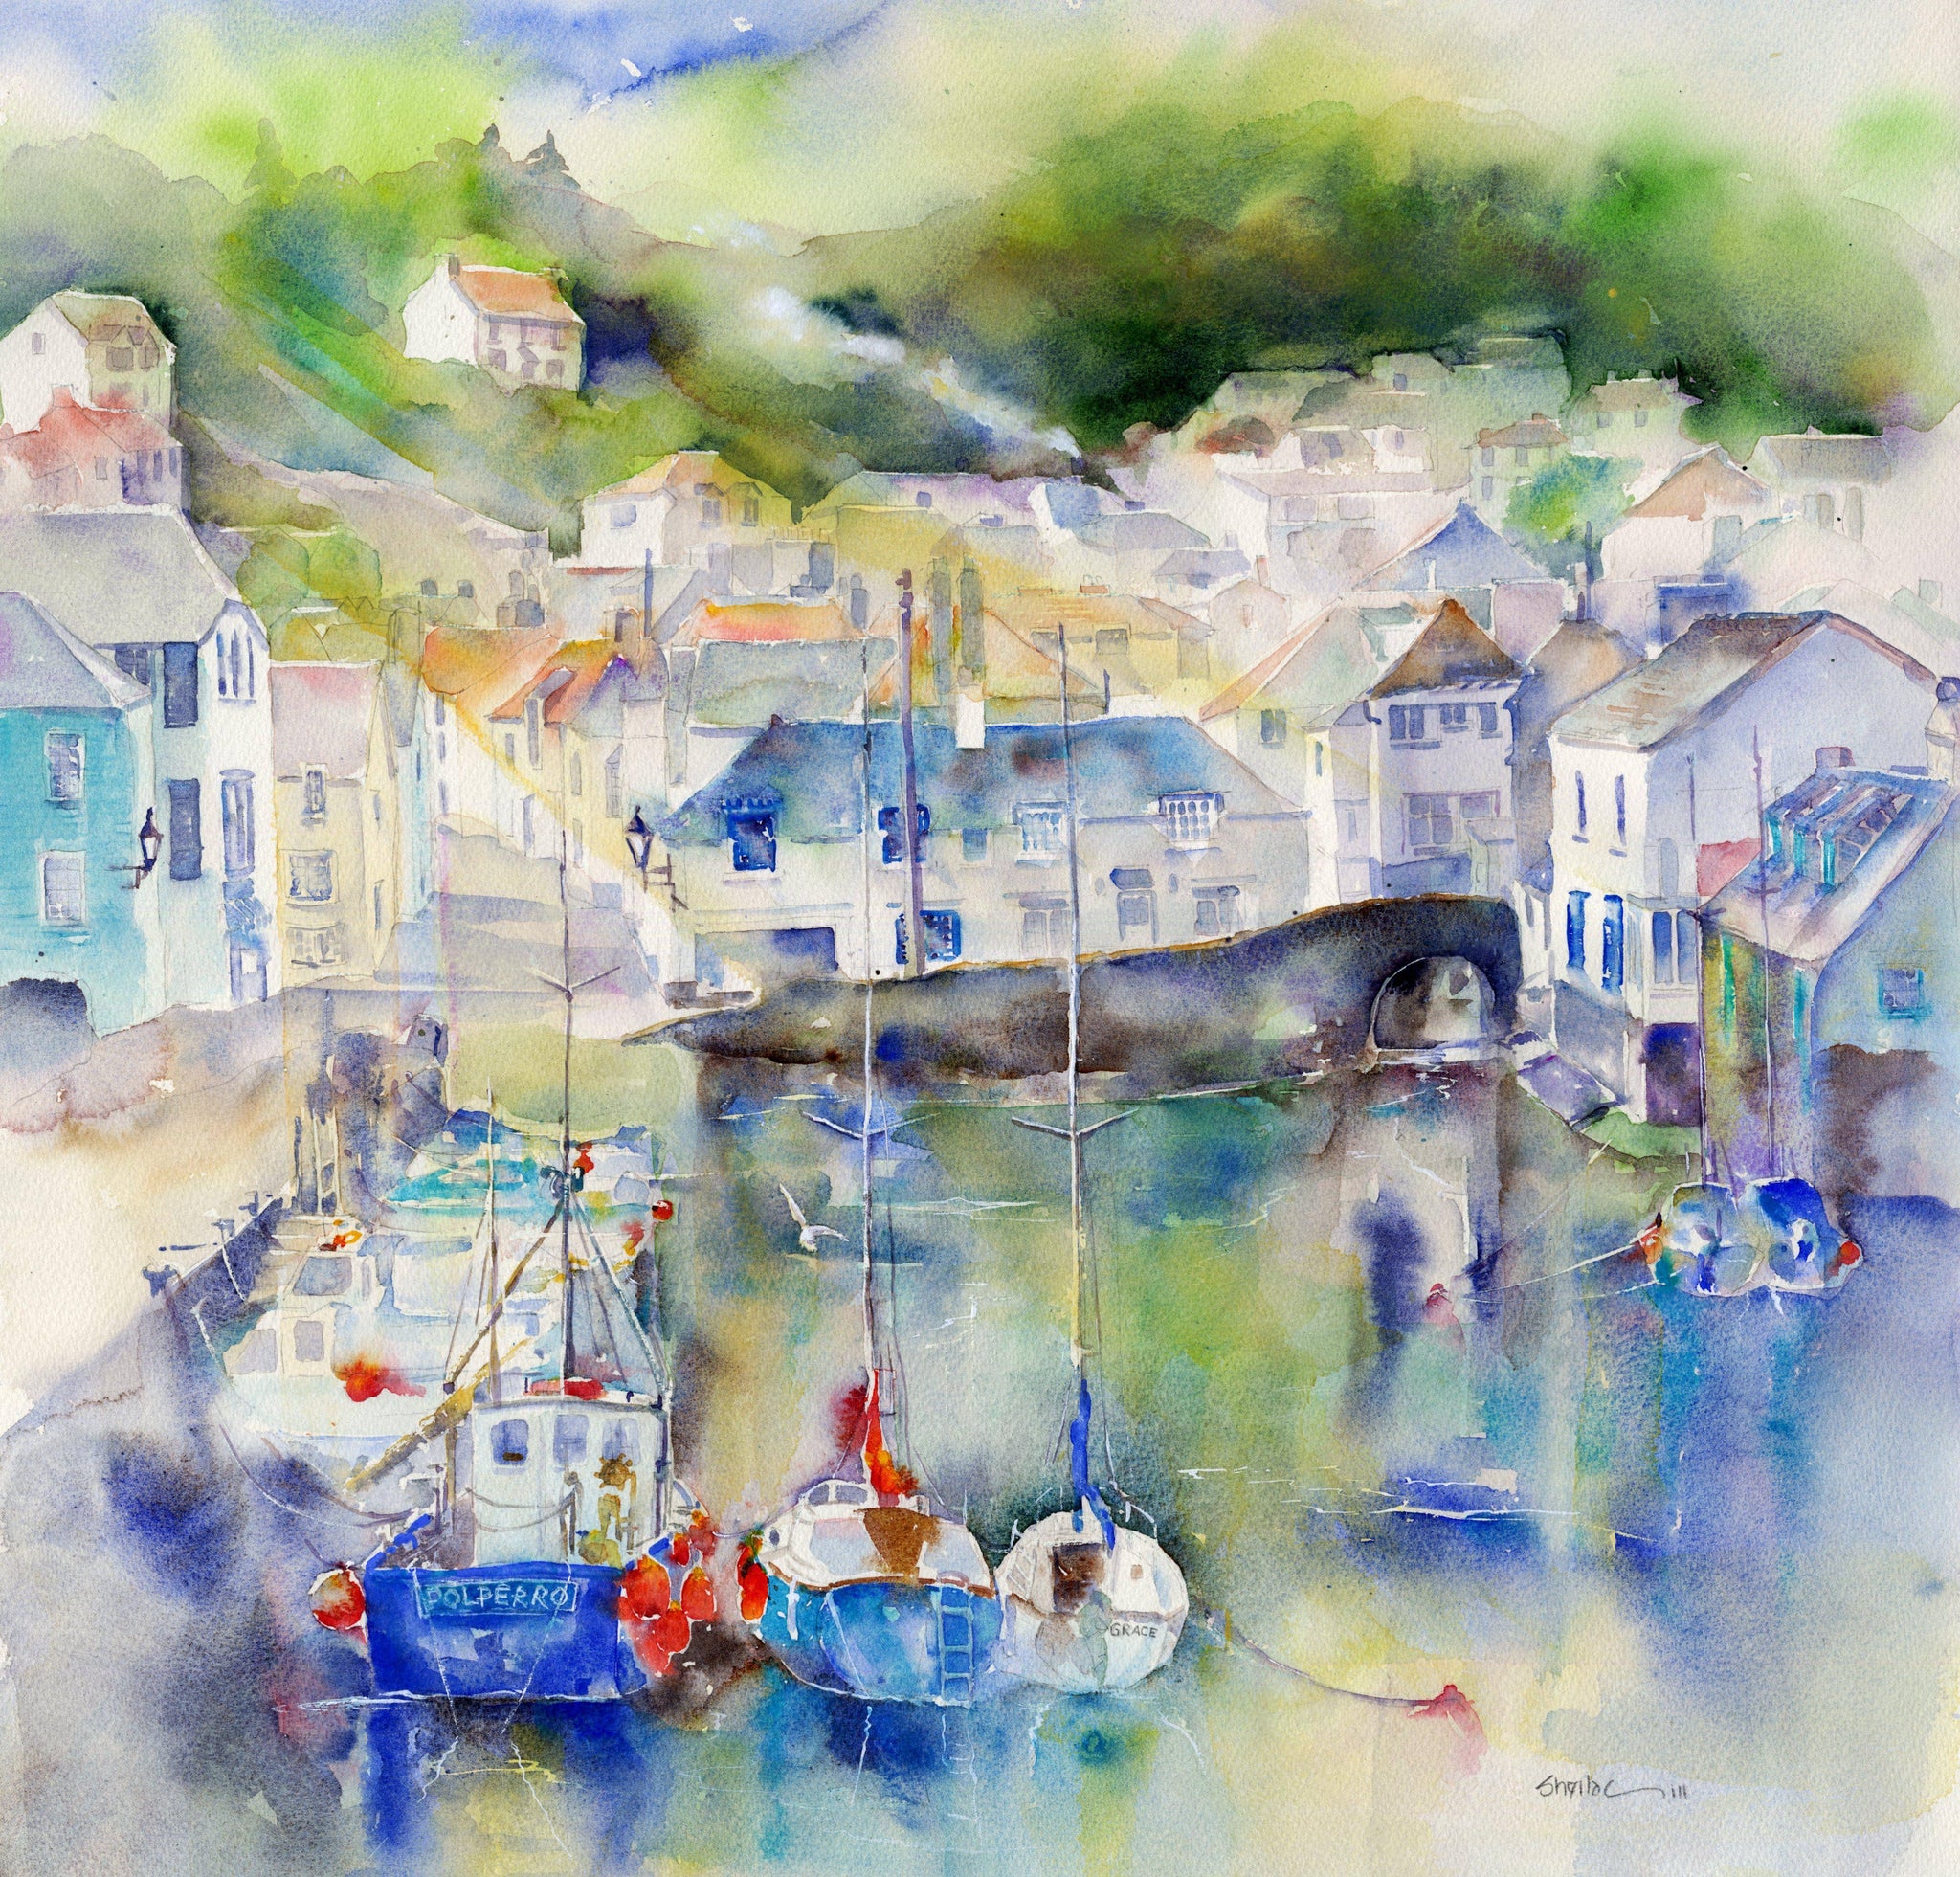 Polperro Harbour, Cornwall Art Print designed by artist Sheila Gill
